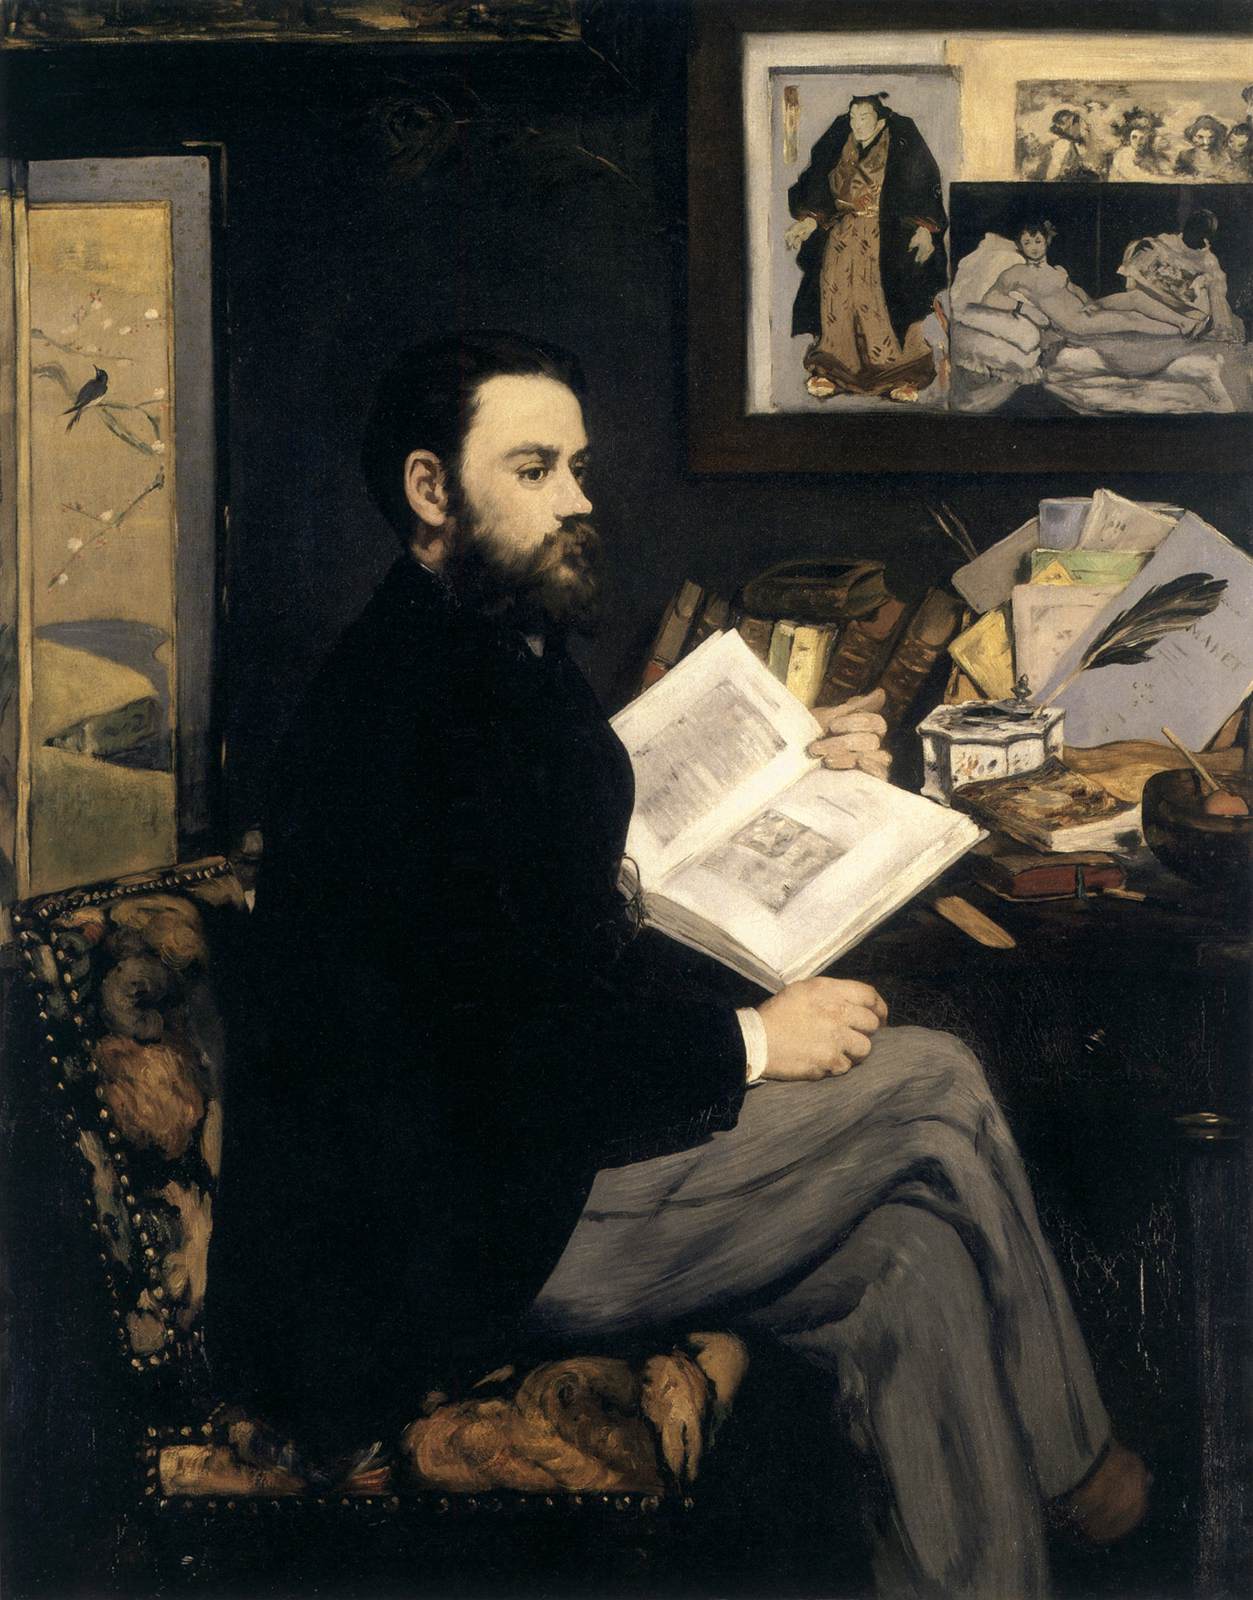 Edouard+Manet-1832-1883 (185).jpg